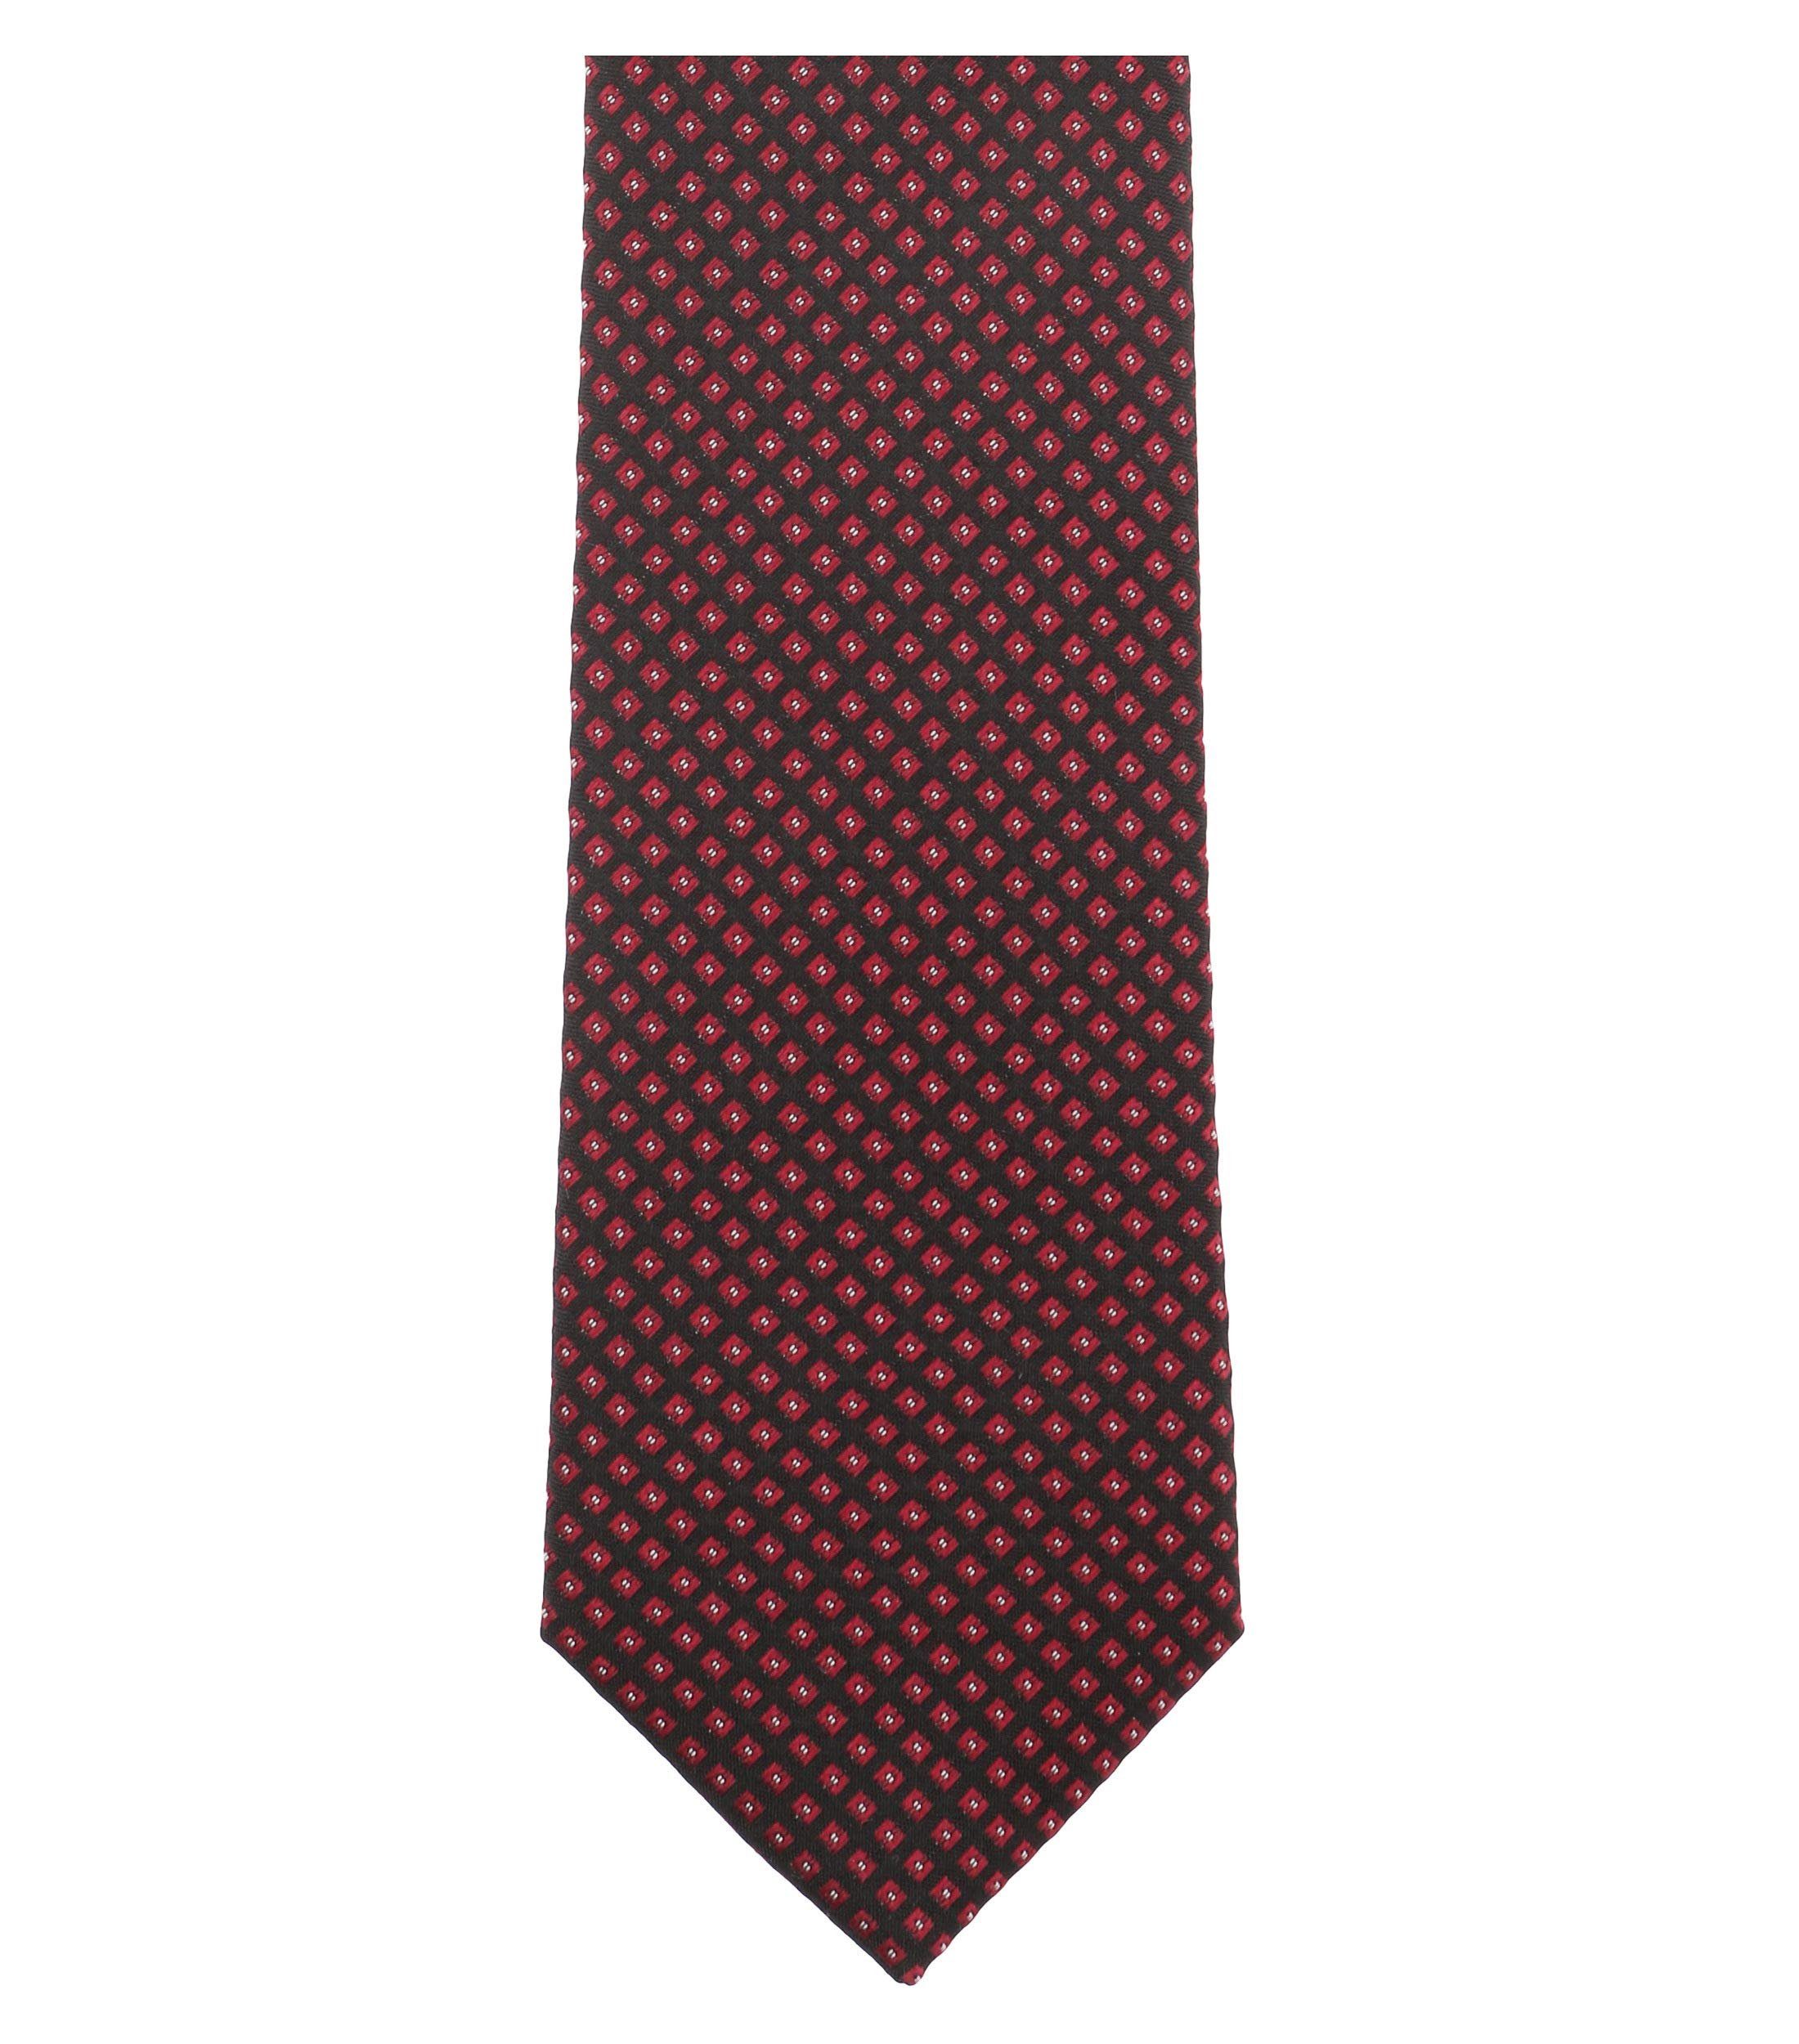 (1-St) rot Krawatte VENTI